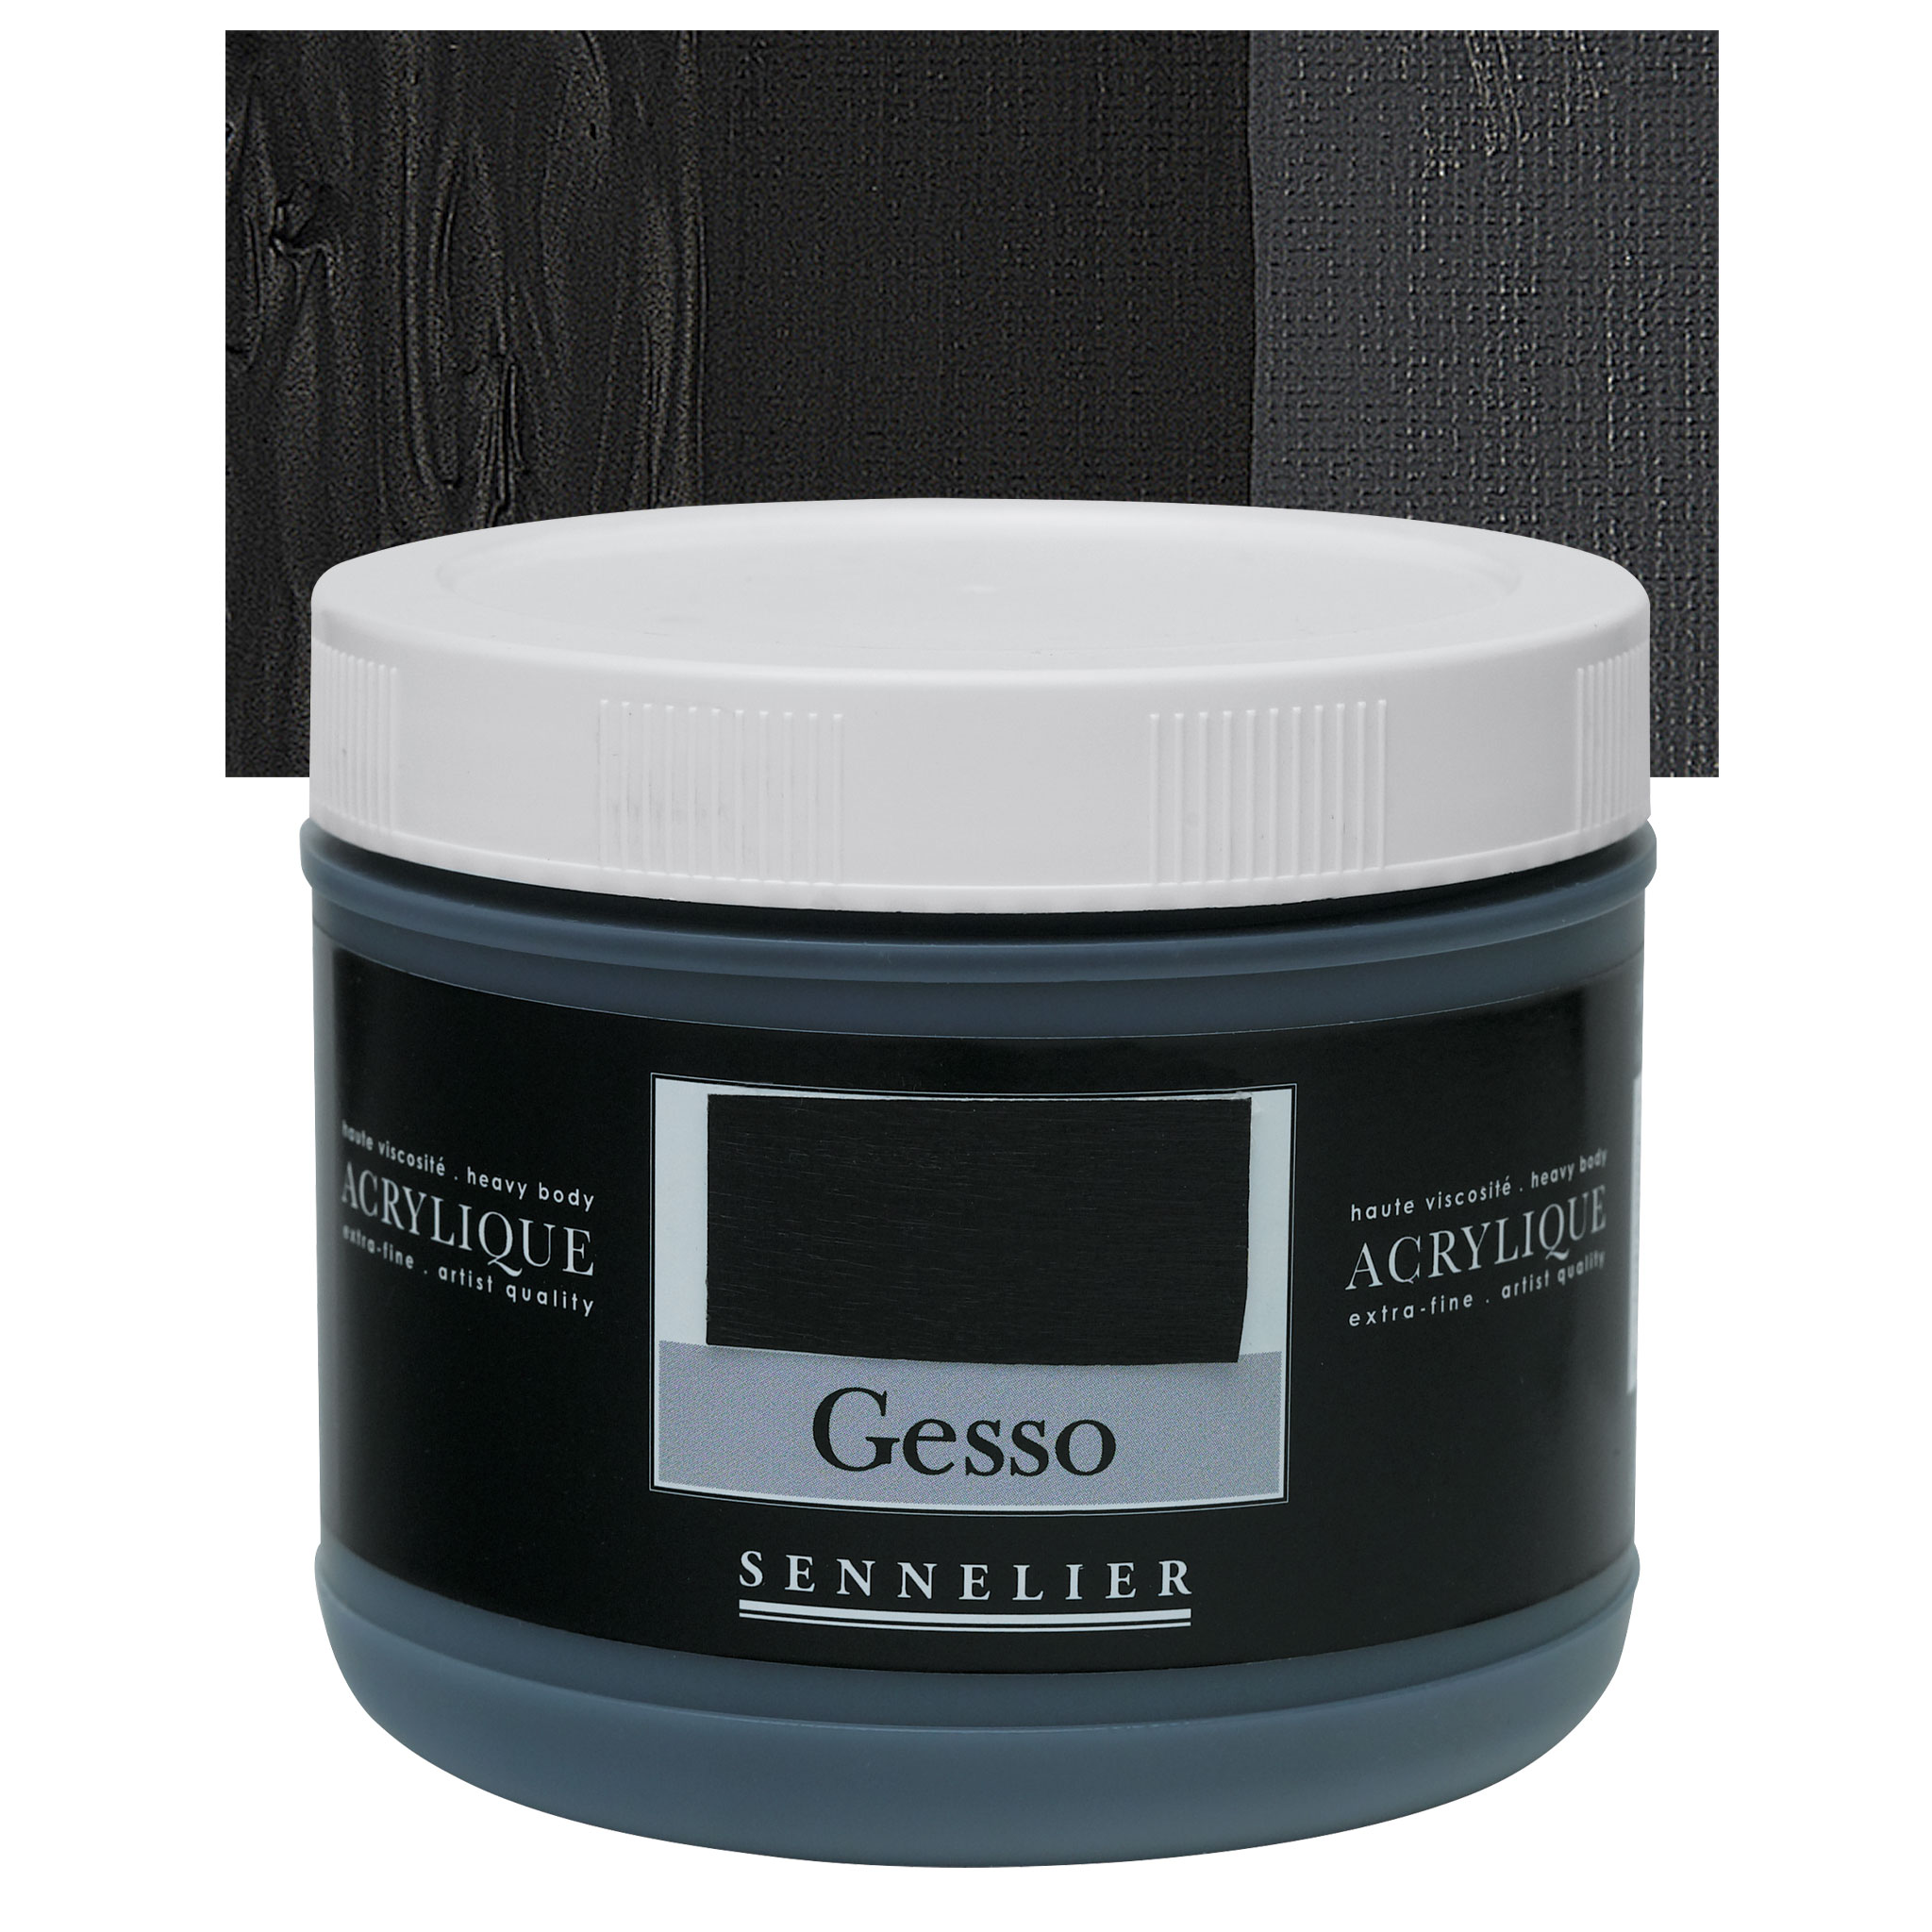 Sennelier Acrylic Gesso - 500 ml, Black, Semi-Absorbent Gesso for Watercolor